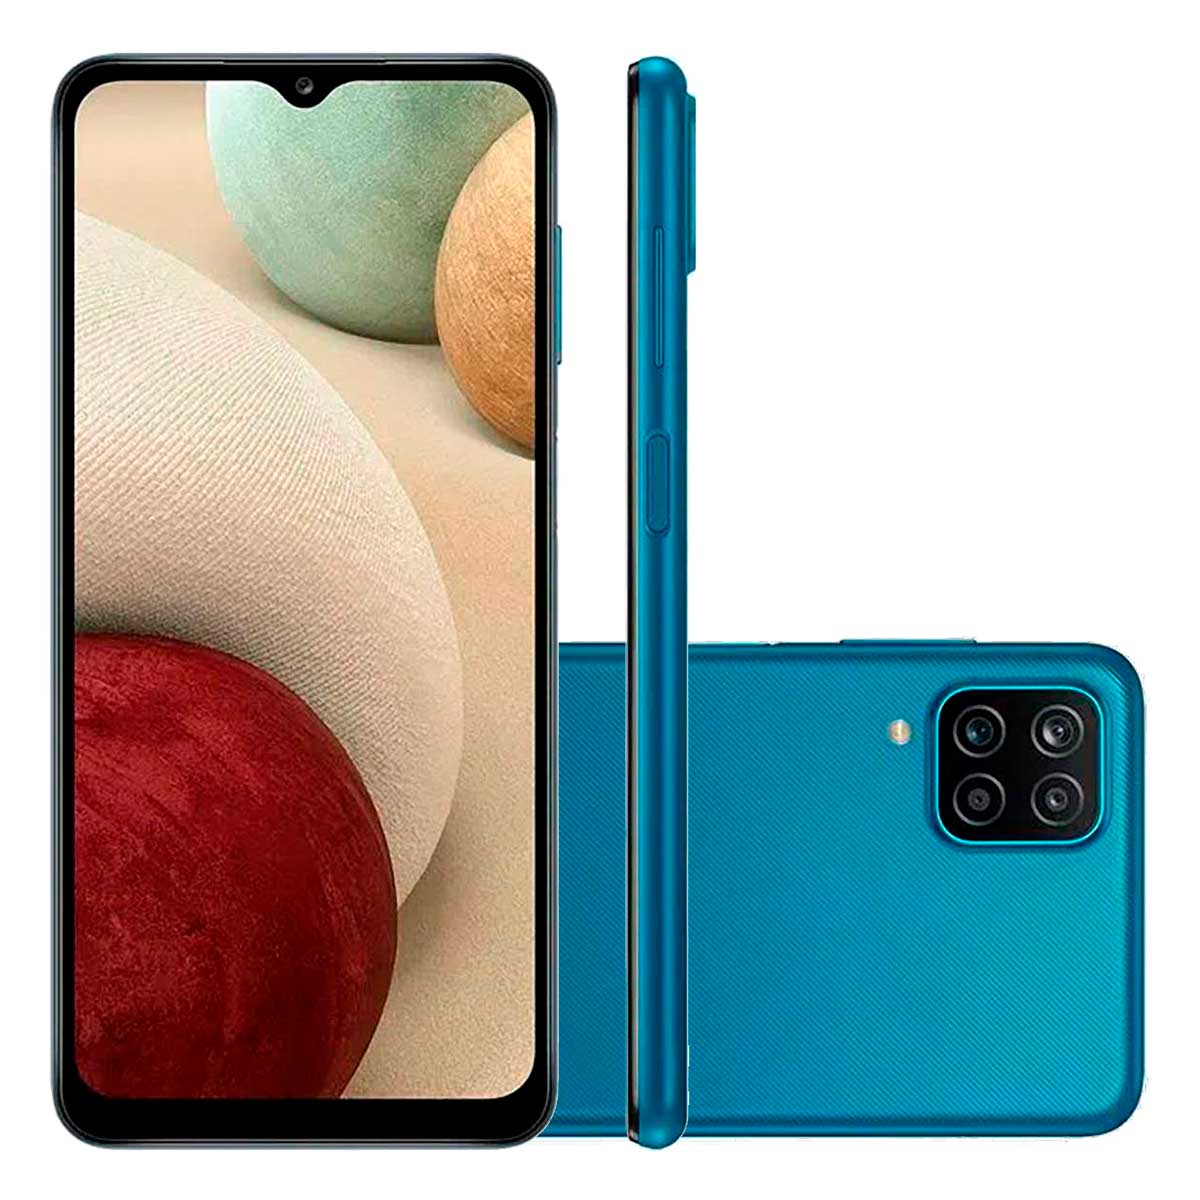 smartphone-samsung-galaxy-a12-64gb-azul-4g-tela-6.5”-camera-quadrupla-48mp-selfie-8mp-dual-chip-android-10.0-1.jpg